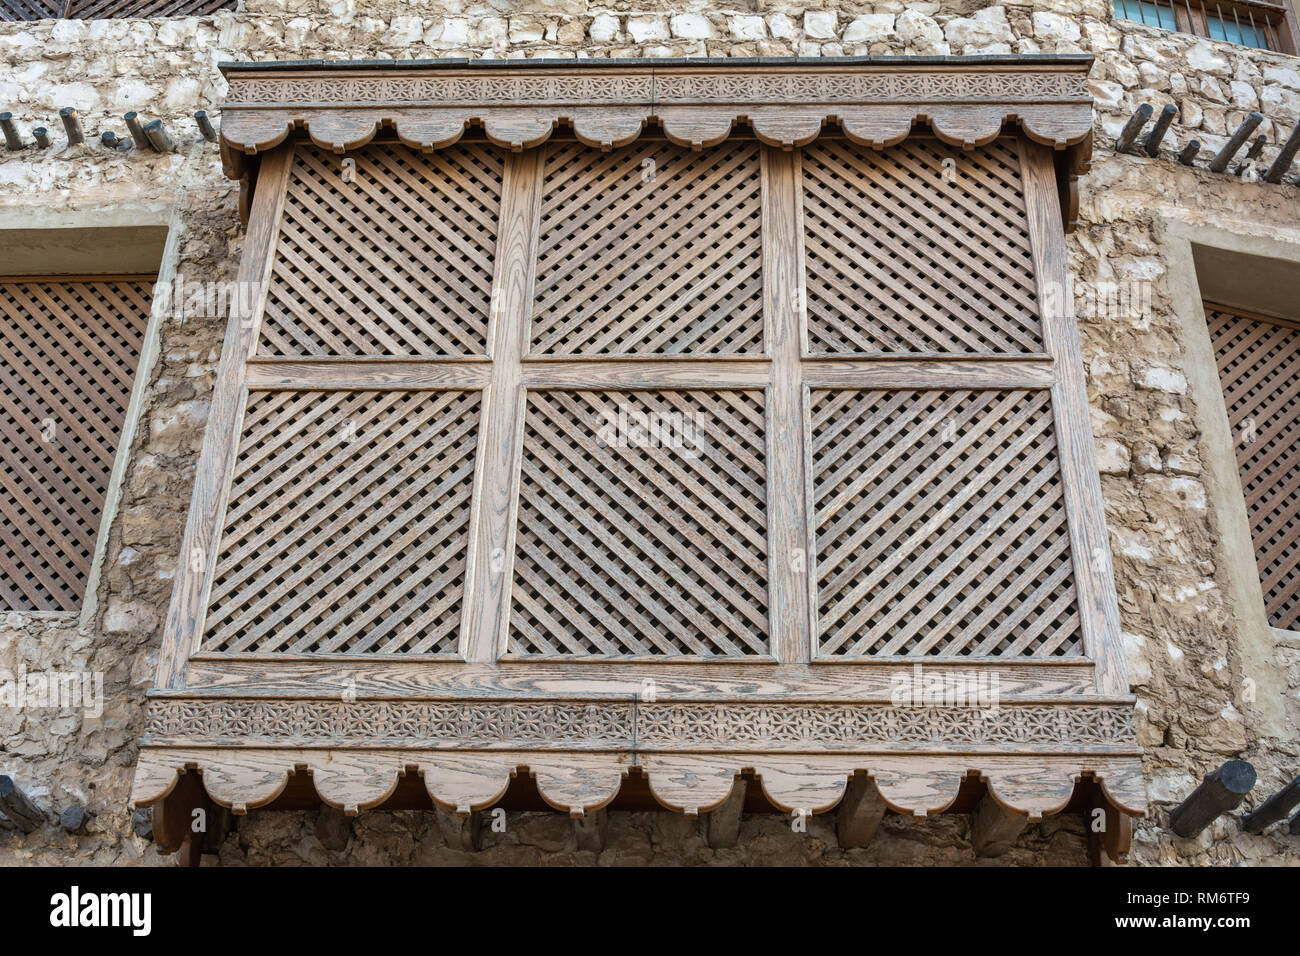 Traditional Arabic mashrabiya balcony enclosed with carved wood latticework in Doha, Qatar. Stock Photo